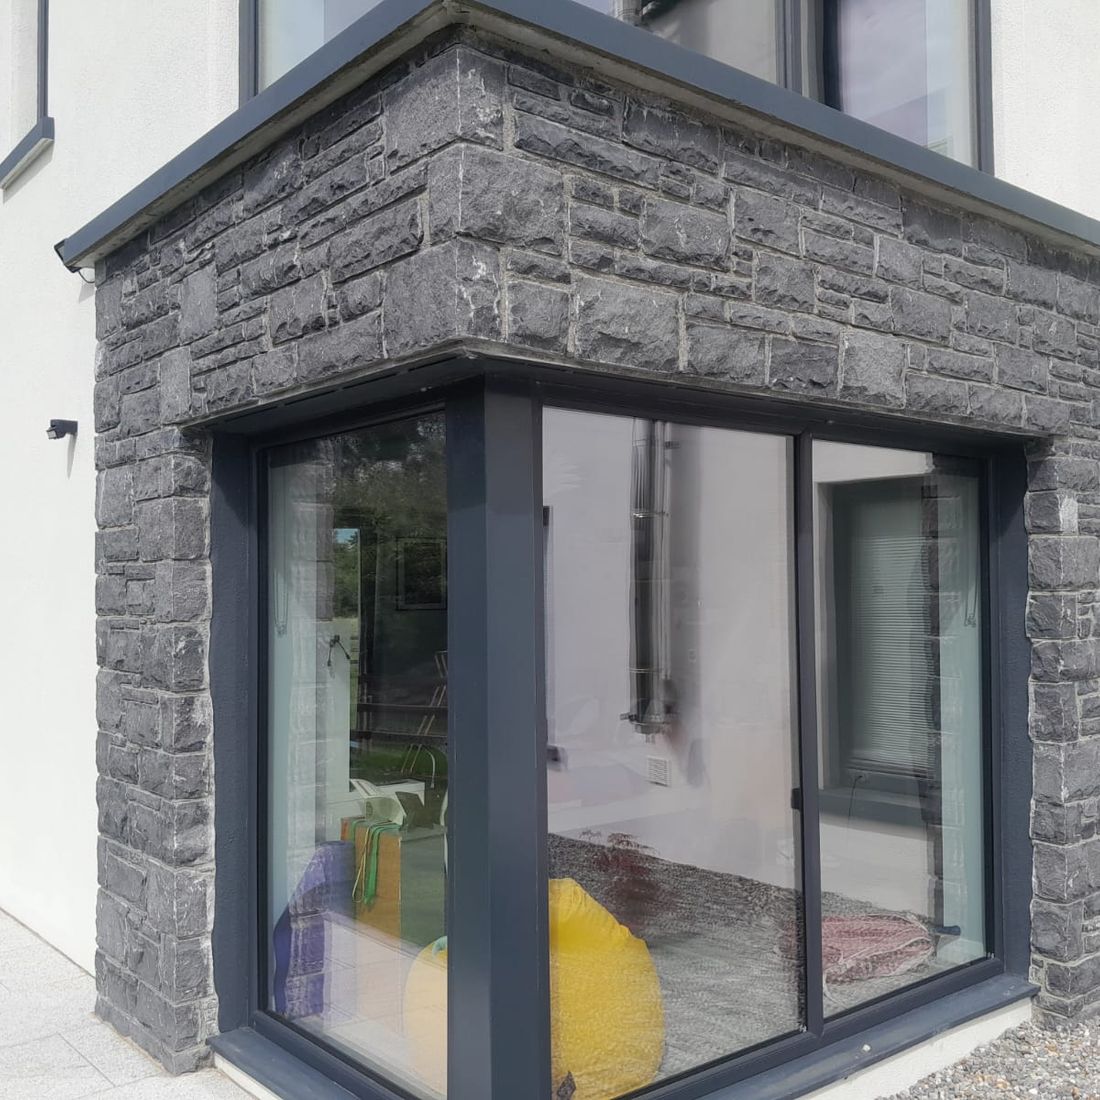 Modular cut limestone framing a corner window